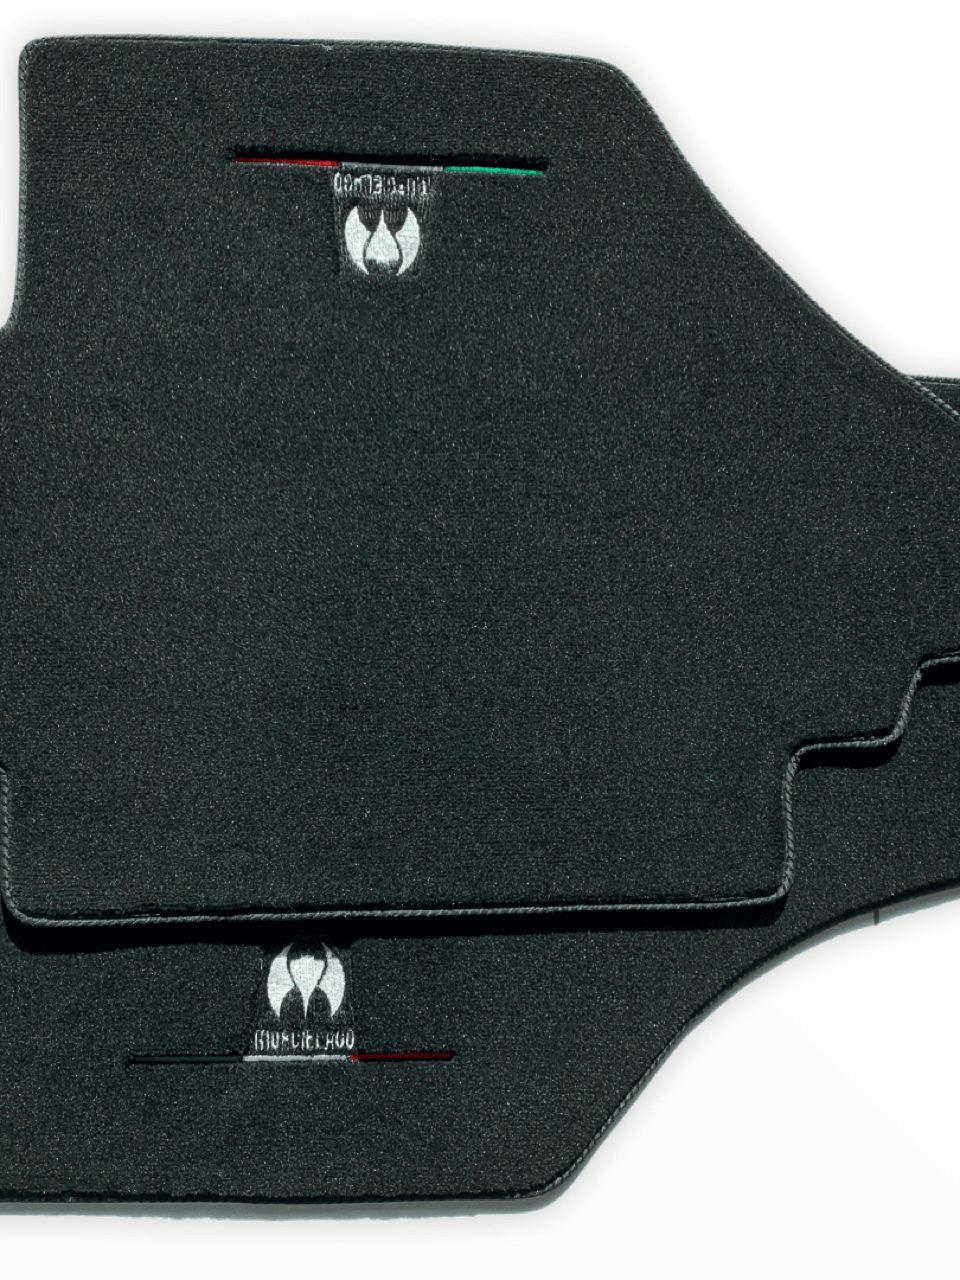 Floor Mats for Lamborghini Murcielago Embroidery AutoWin Brand - AutoWin